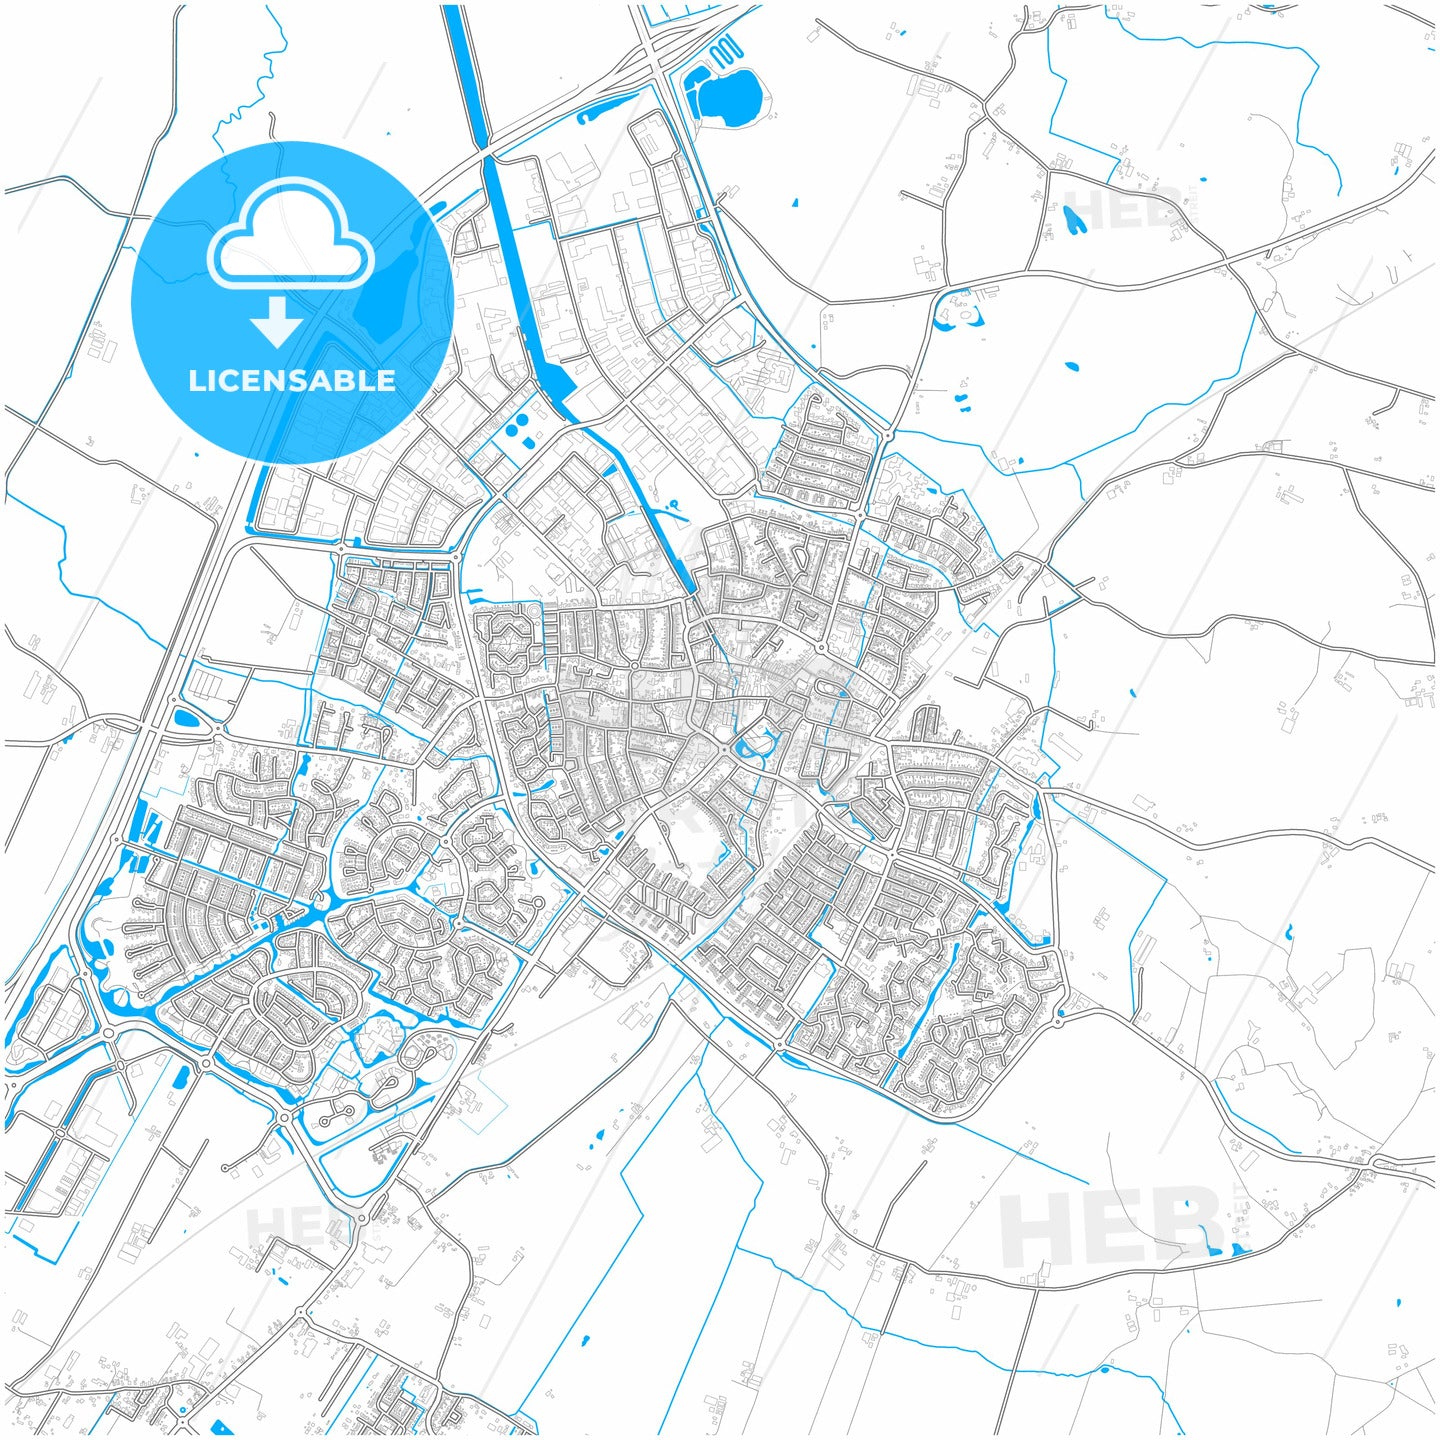 Nijkerk, Gelderland, Netherlands, city map with high quality roads.